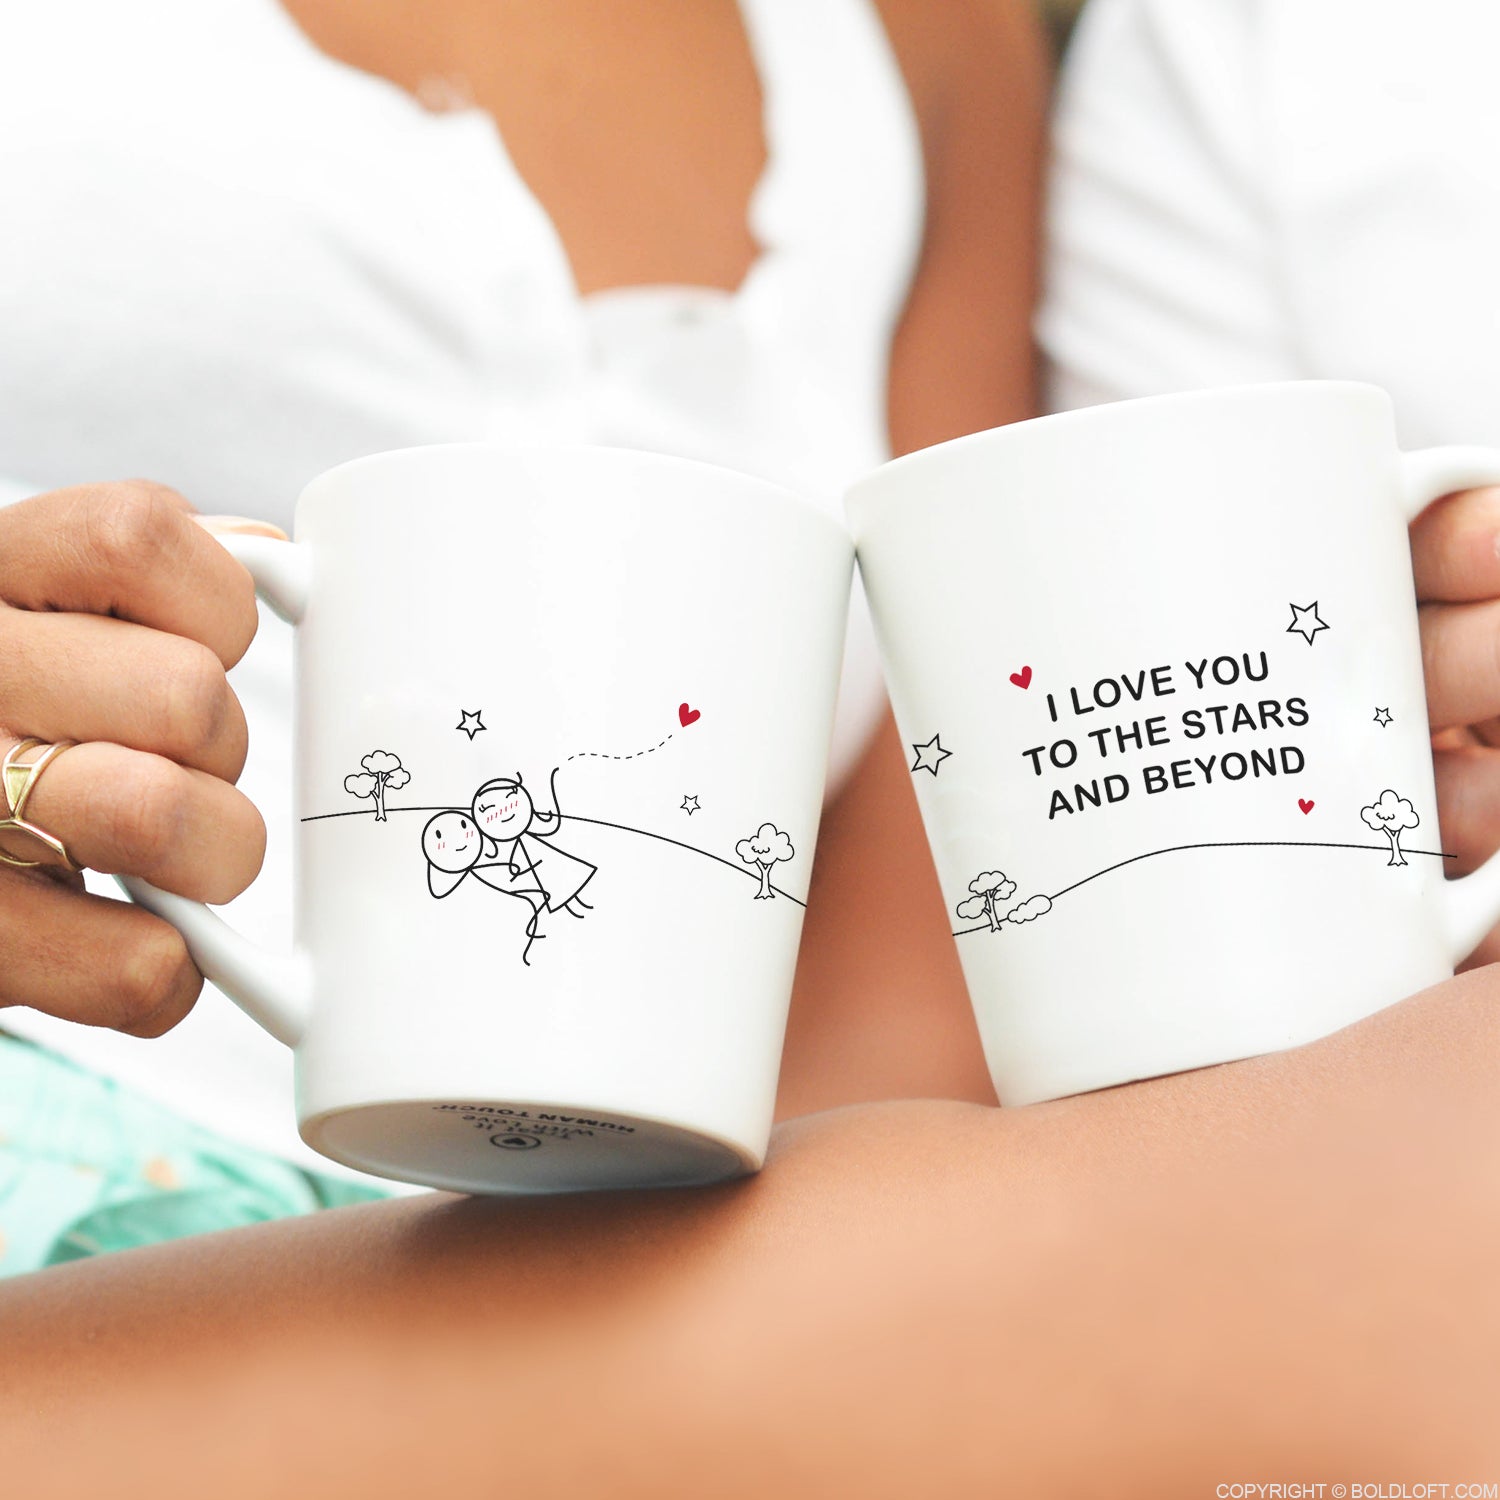 boldloft couple coffee mugs long distance relationship gifts for boyfriend girlfriend anniversary wedding engagement 